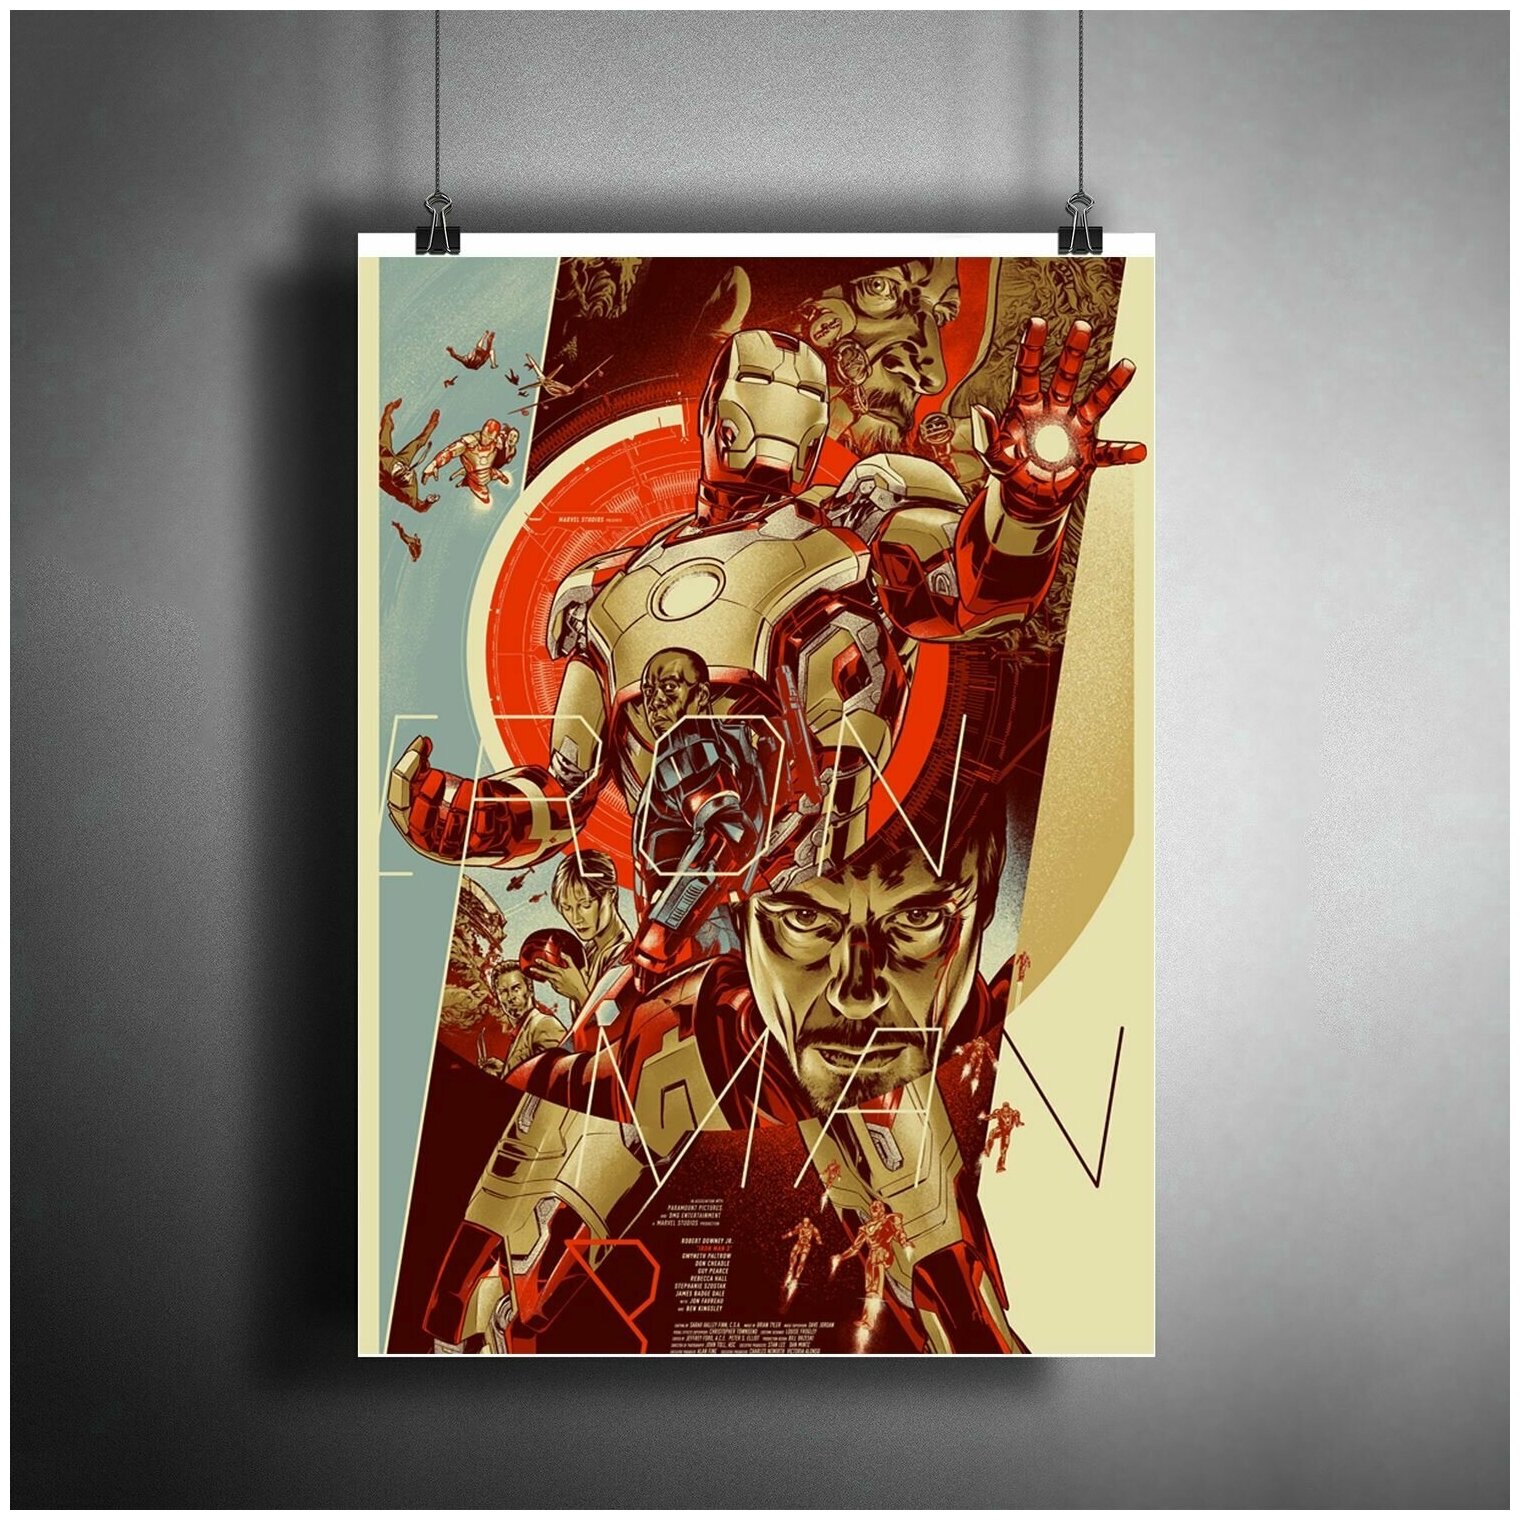 Постер плакат для интерьера "Фильм: Железный Человек. Комиксы Марвел. The Iron Man" / Декор дома, офиса, комнаты, квартиры, детской A3 (297 x 420 мм)